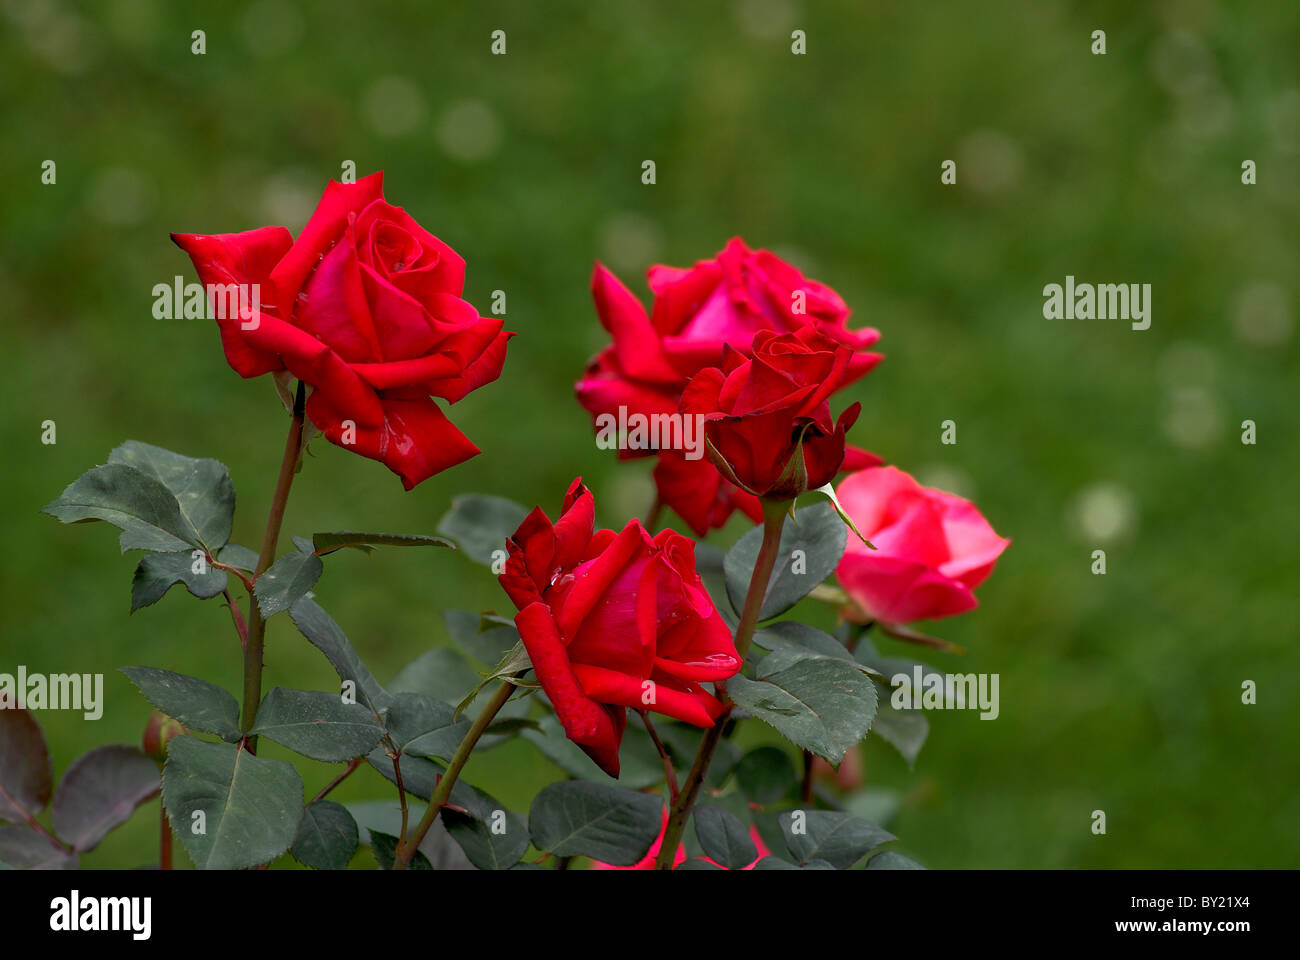 CENTENARY ROSE GARDEN IN OOTY TAMILNADU Stock Photo - Alamy